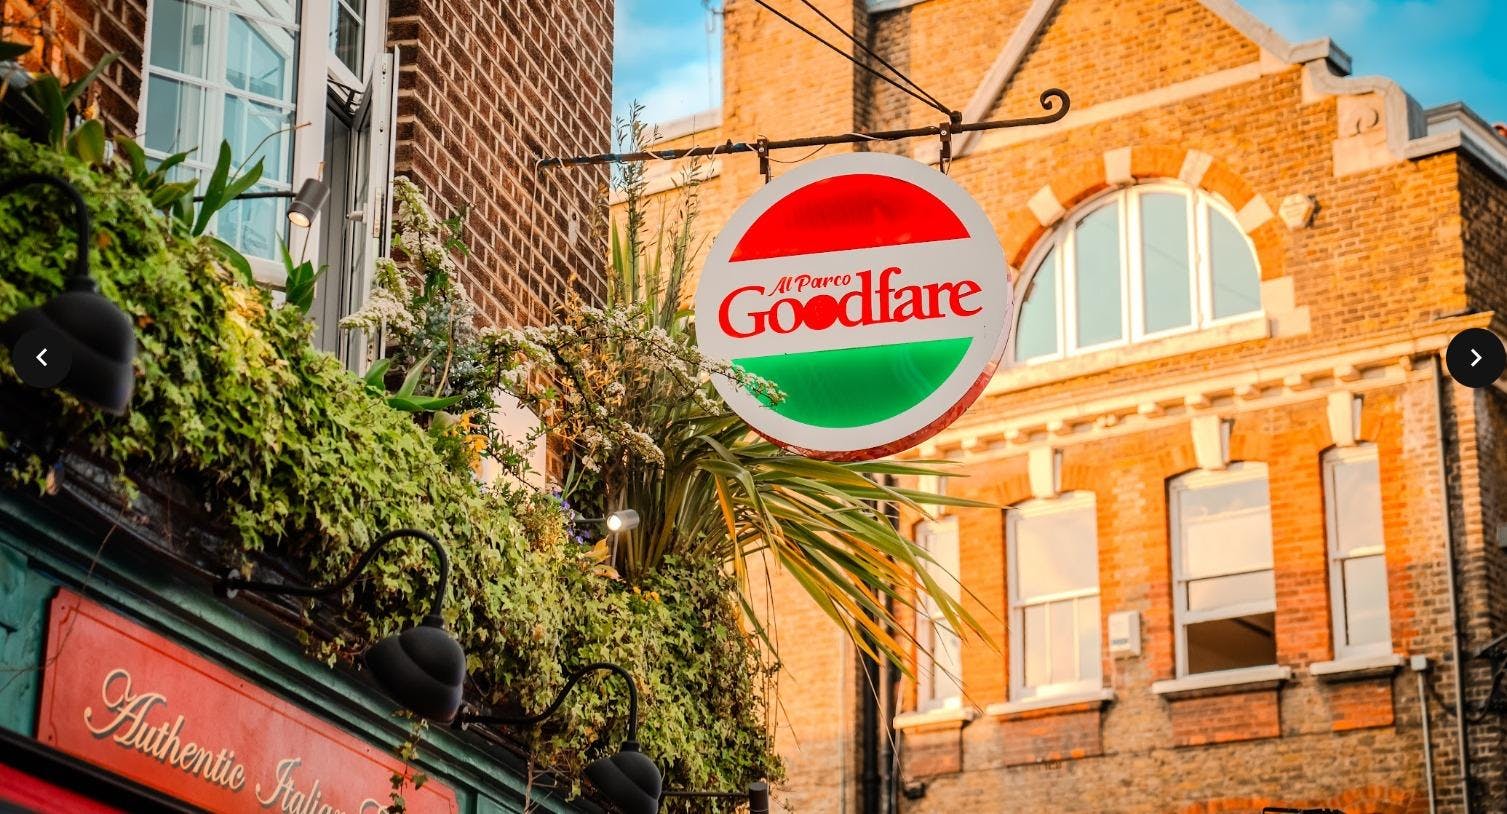 Photo of restaurant Goodfare Camden in Camden, London